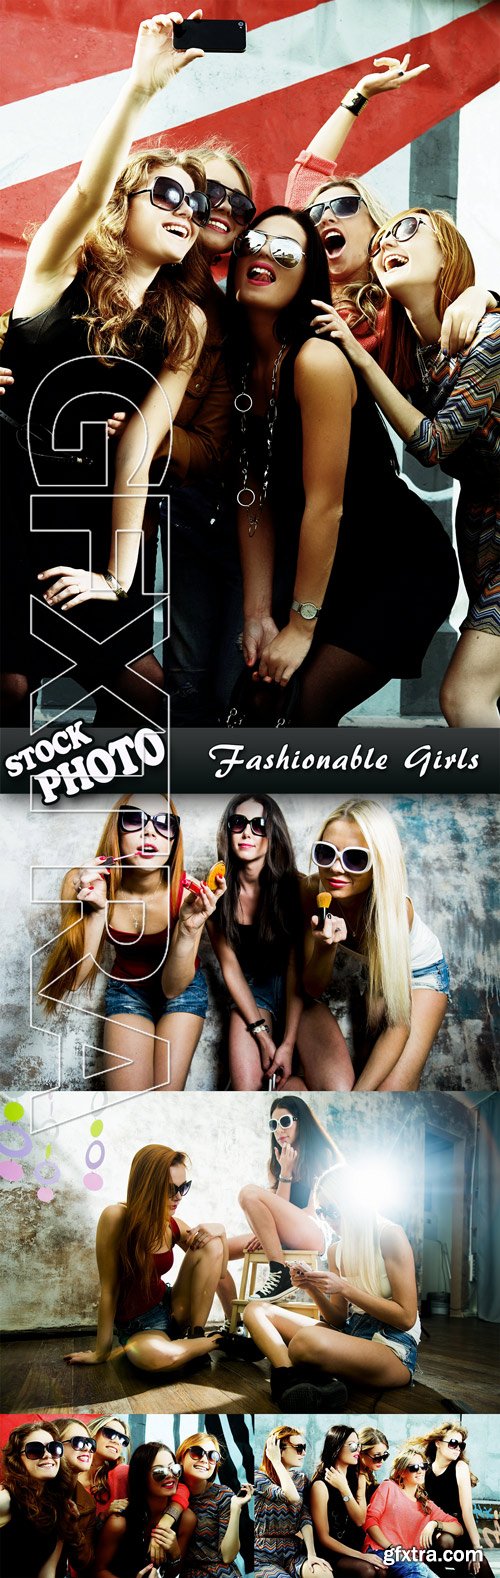 Stock Photo - Fashionable Girls